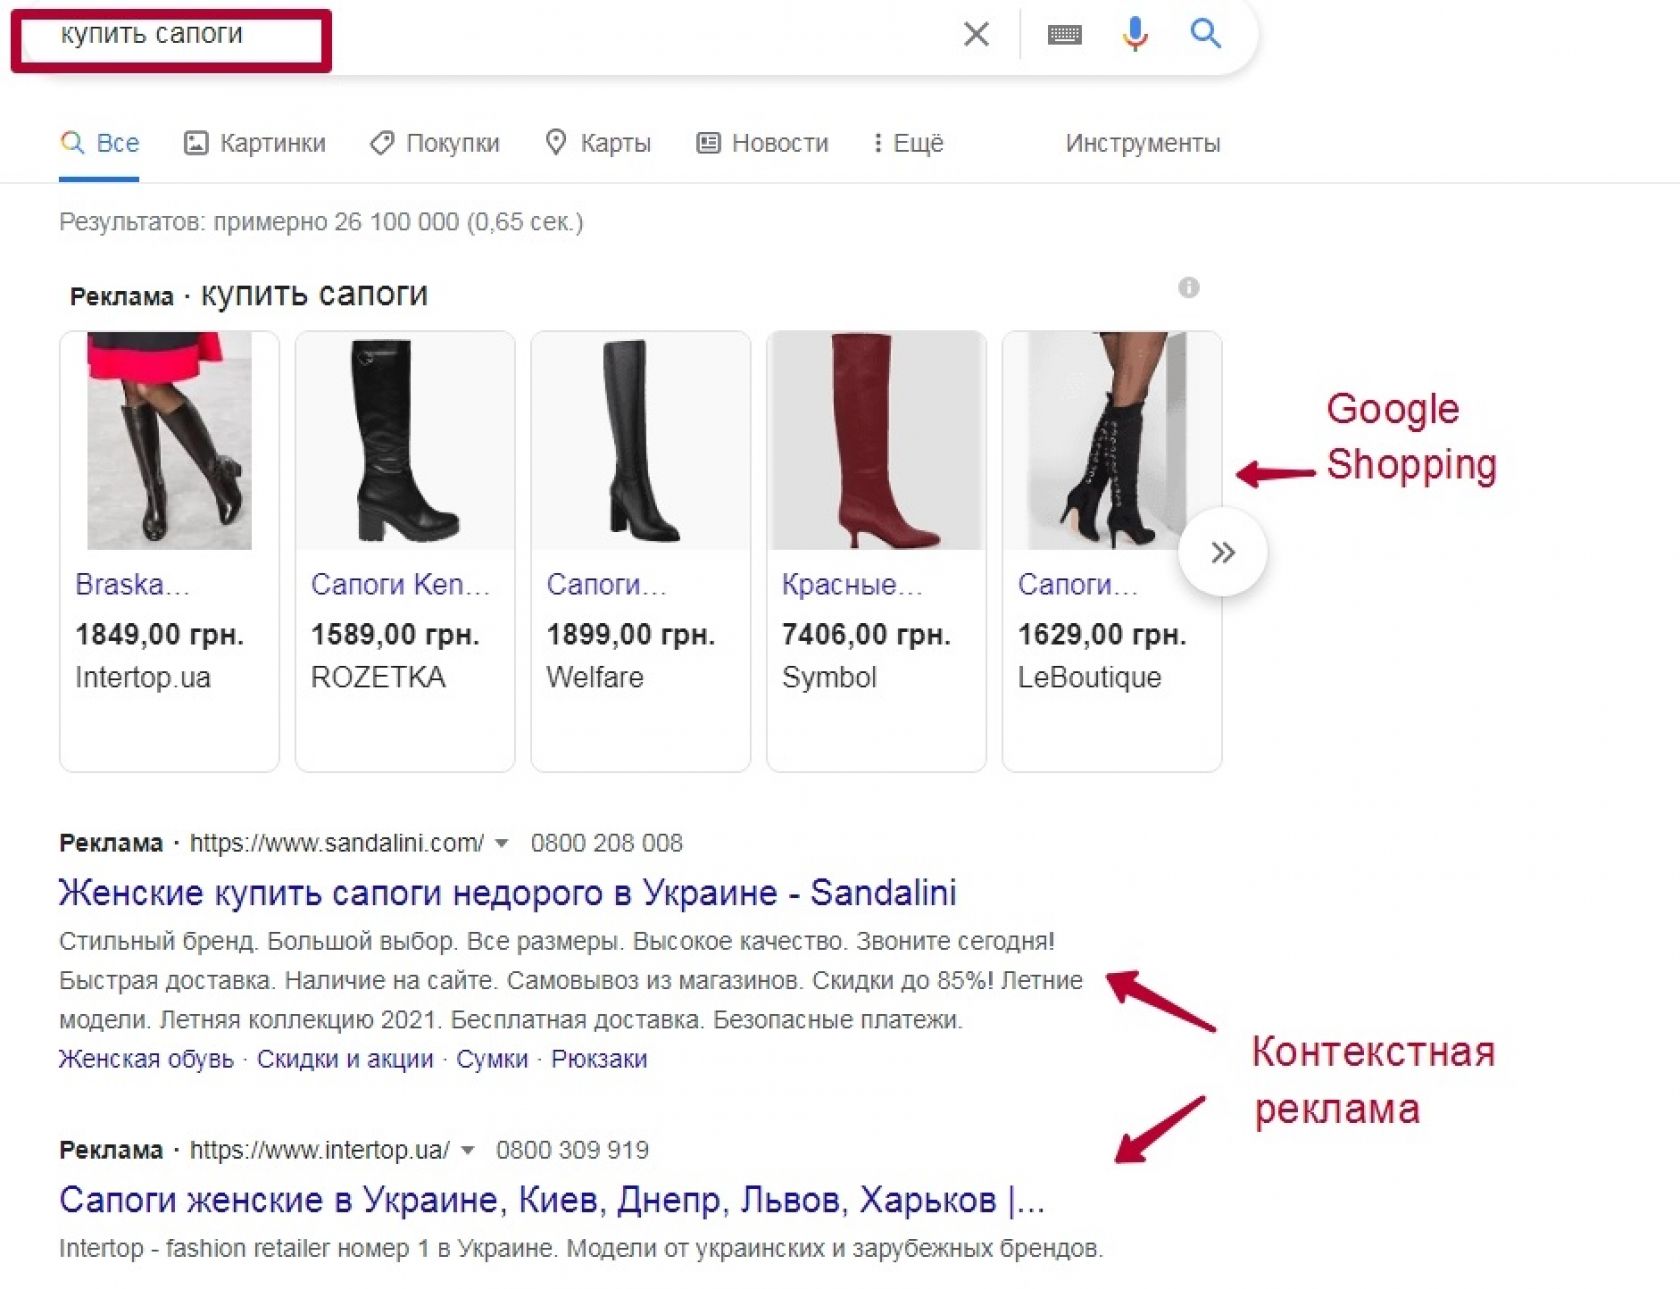 Как работает Google Shopping